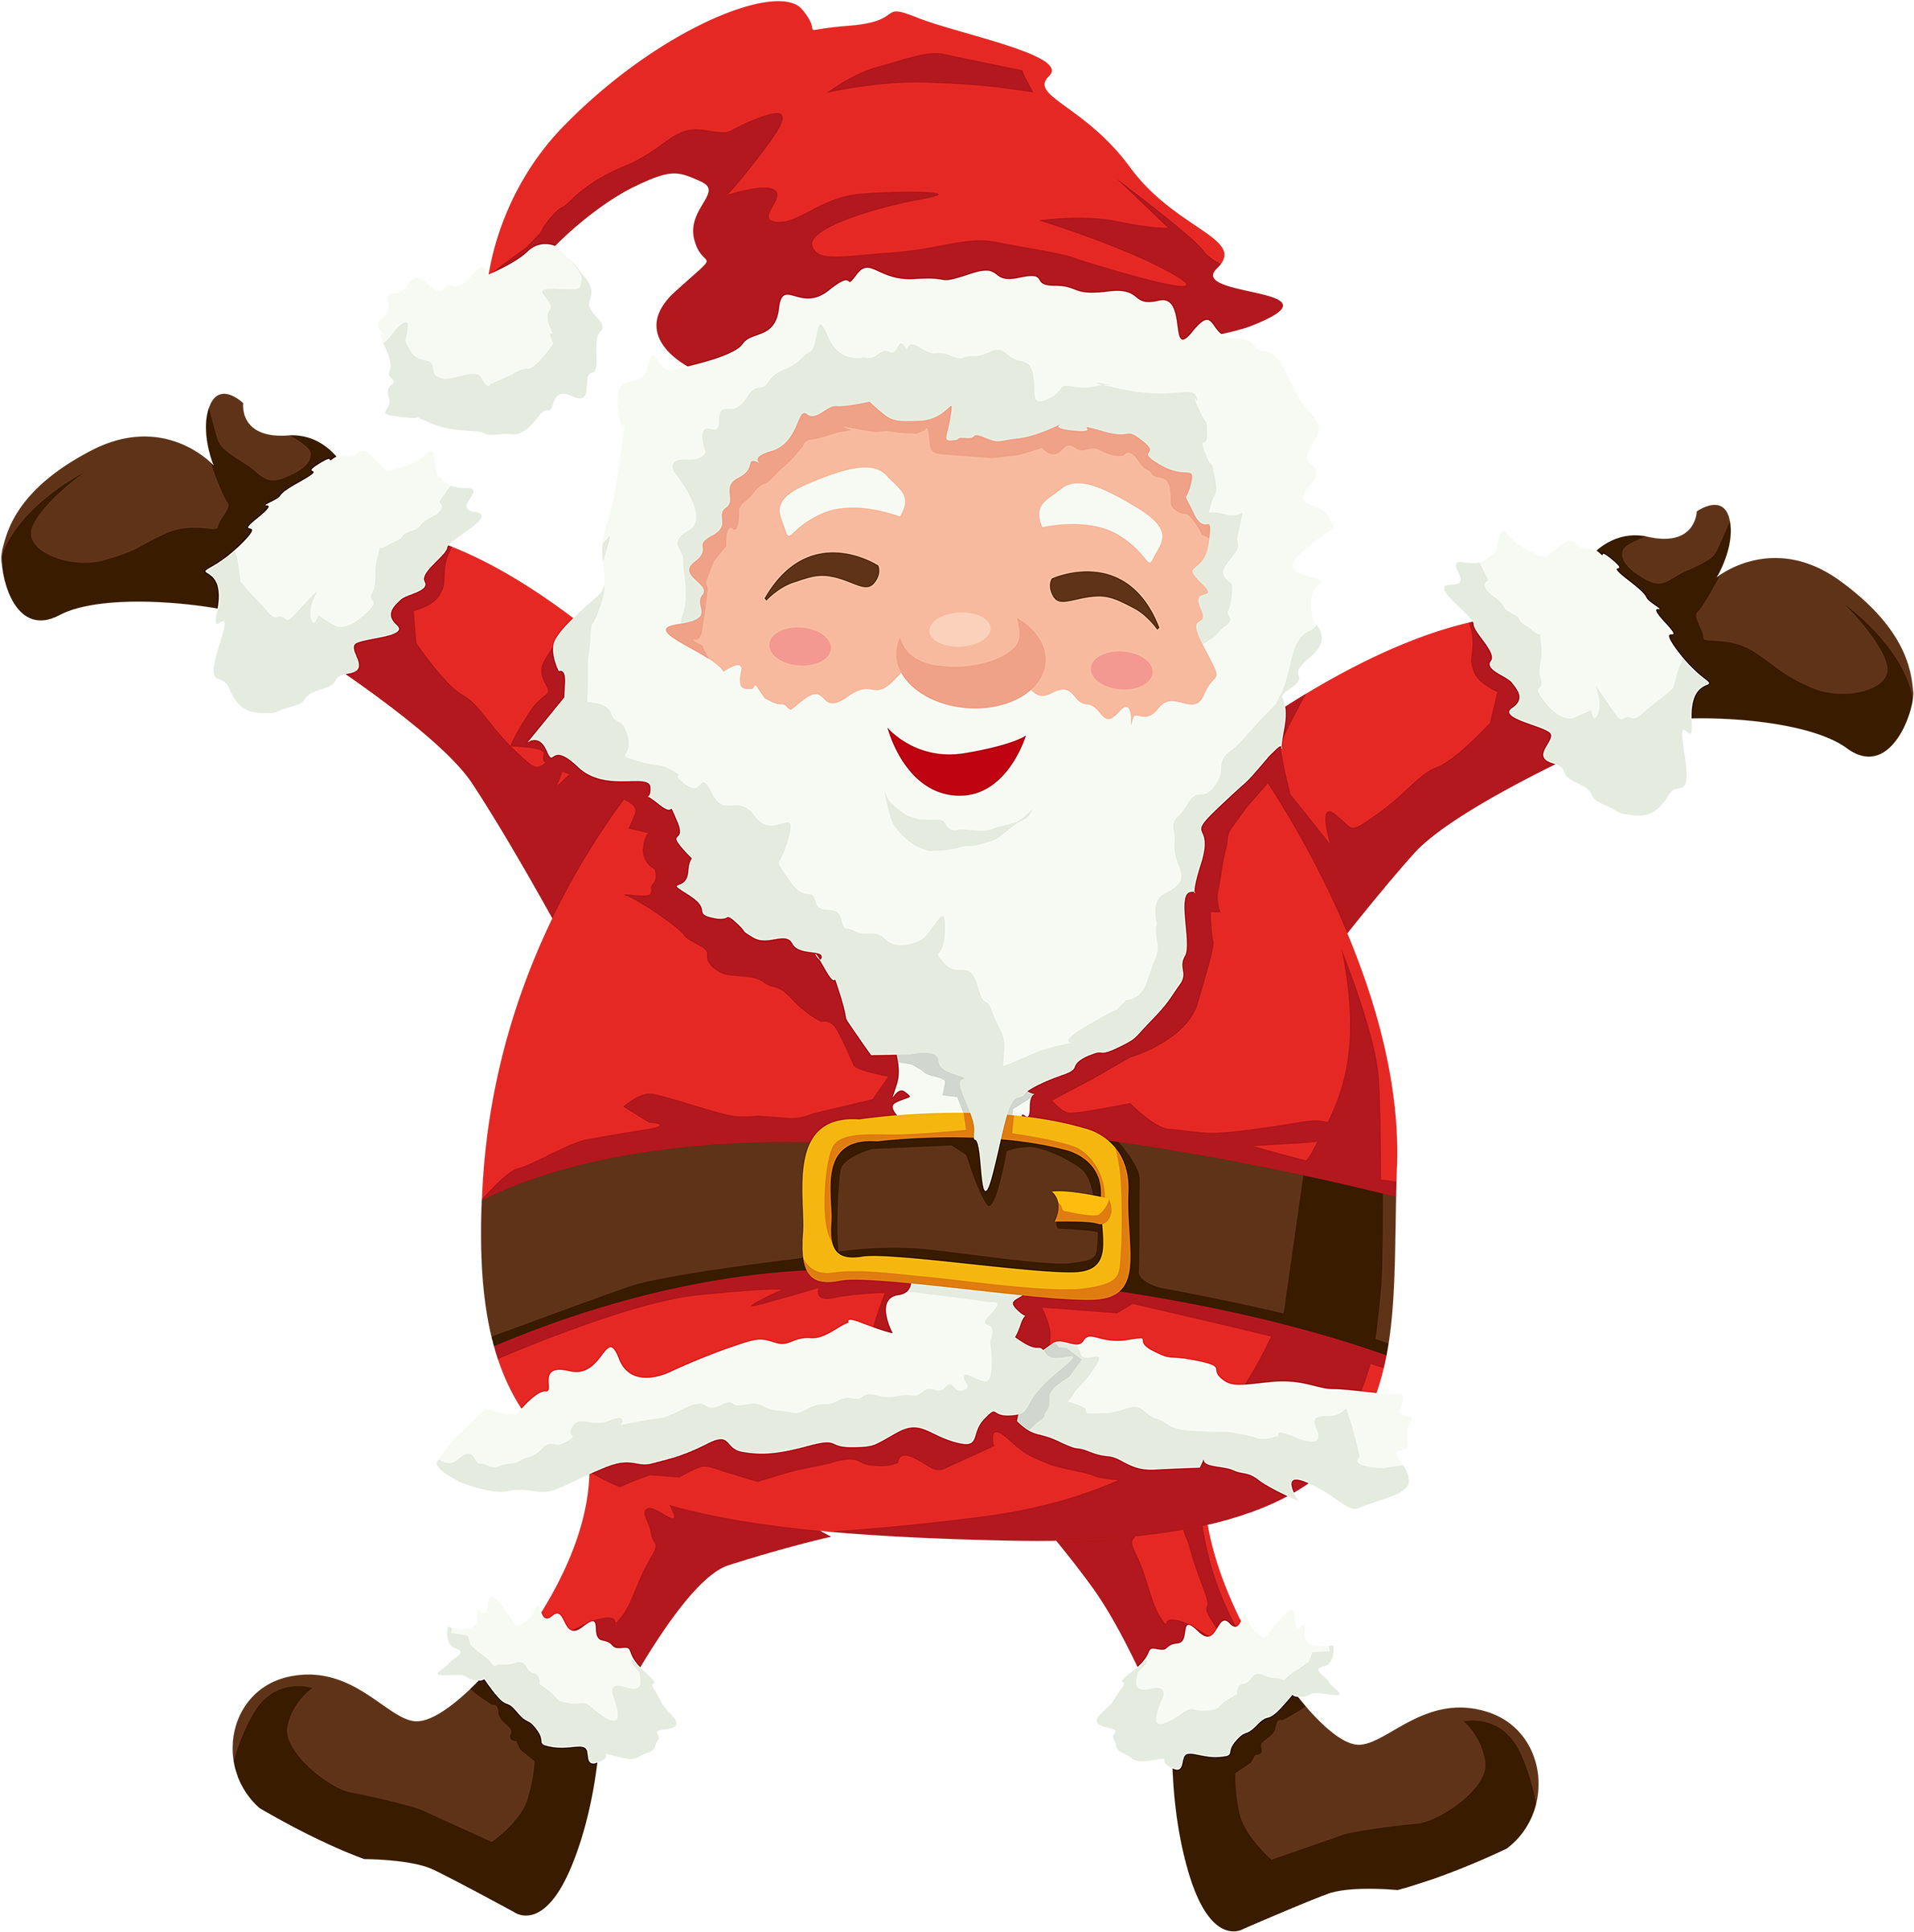 Jolly Santa Claus Celebration PNG